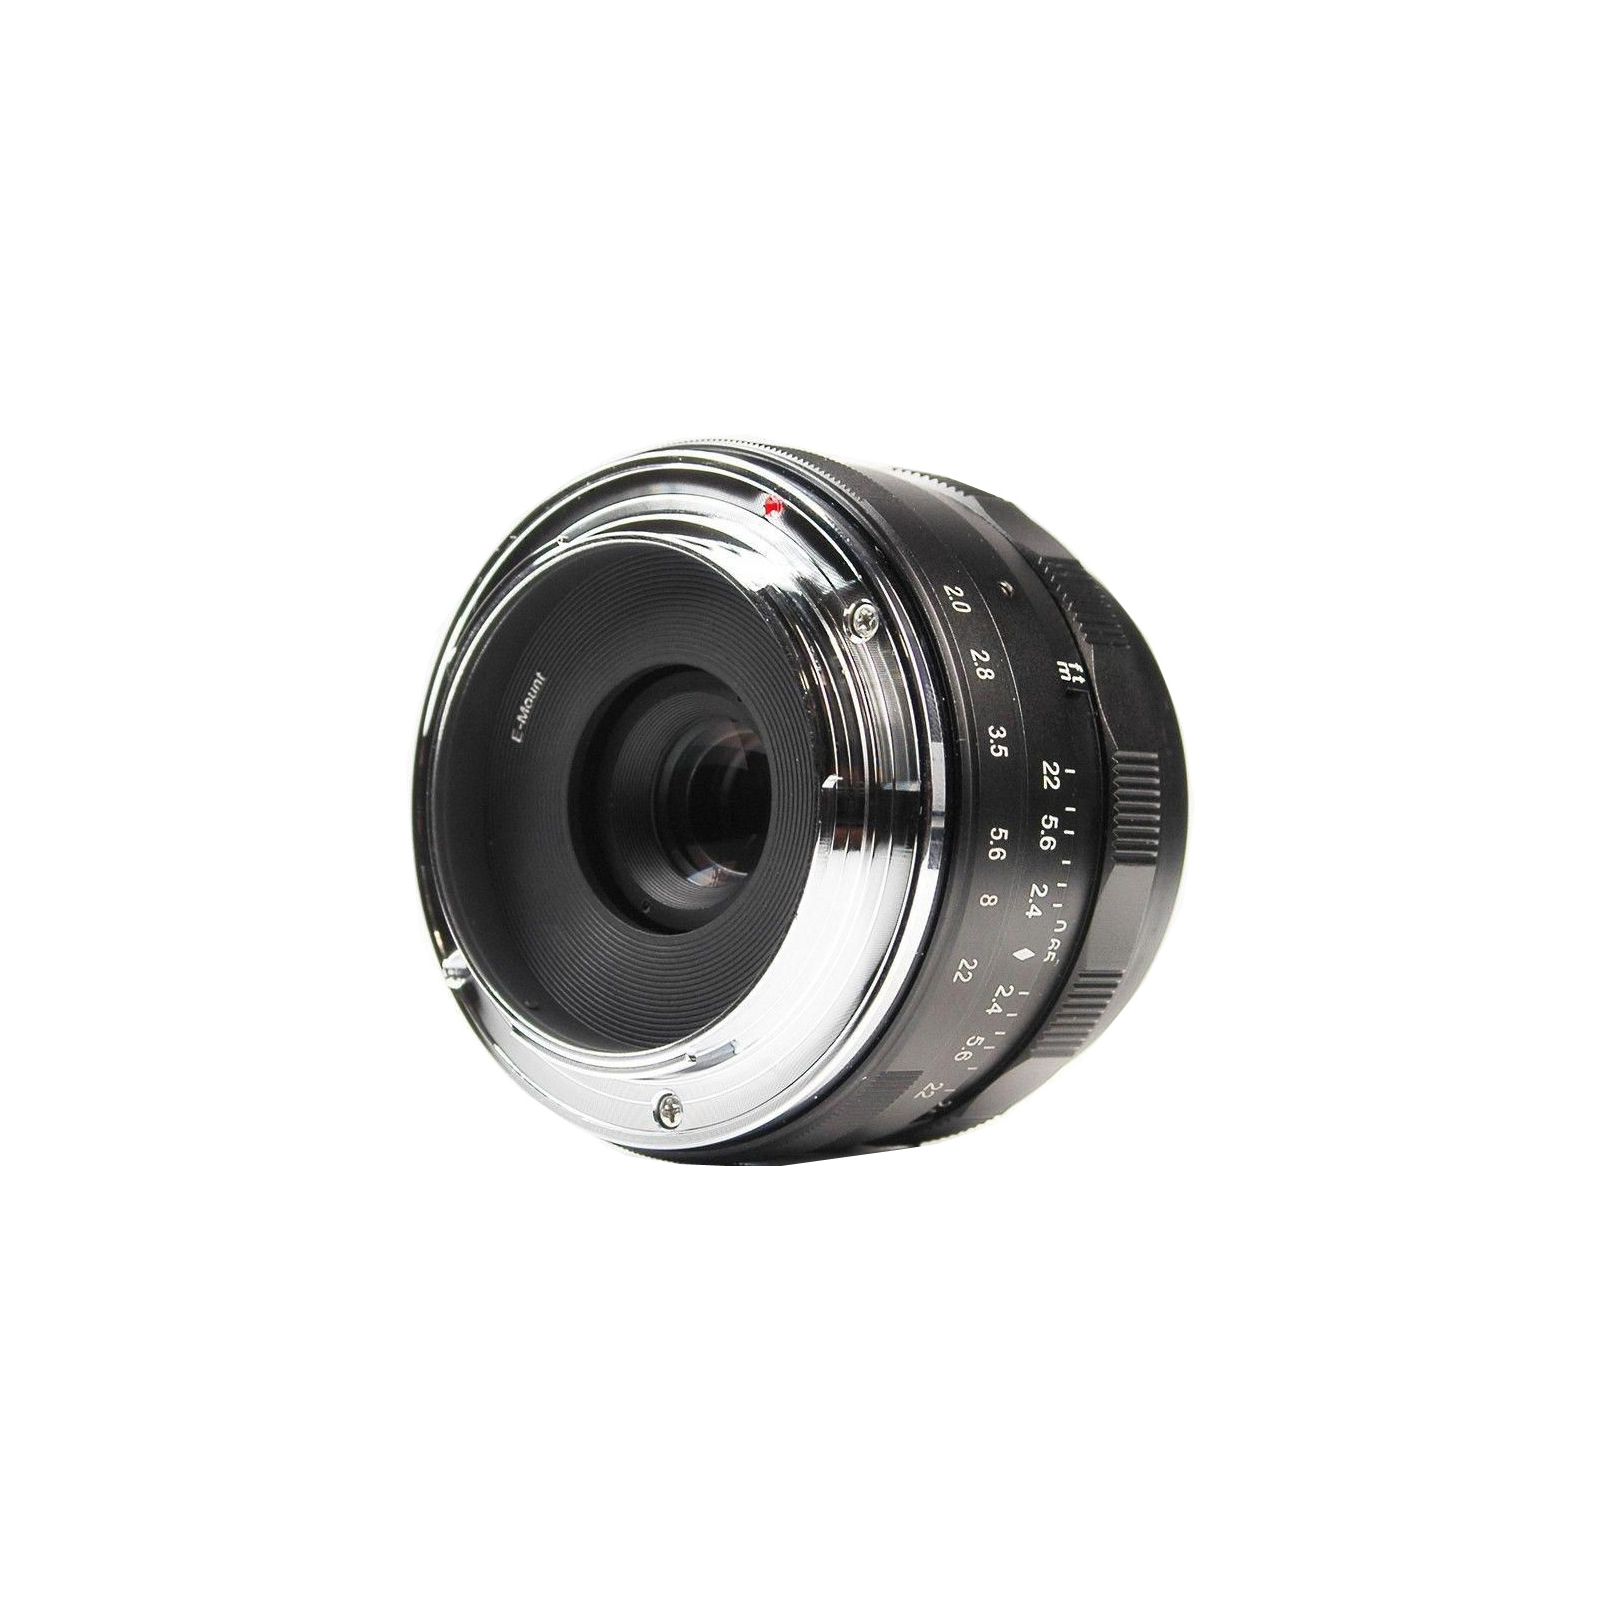 Об'єктив Meike 28mm f/2.8 MC E-mount для Sony (MKES2828)